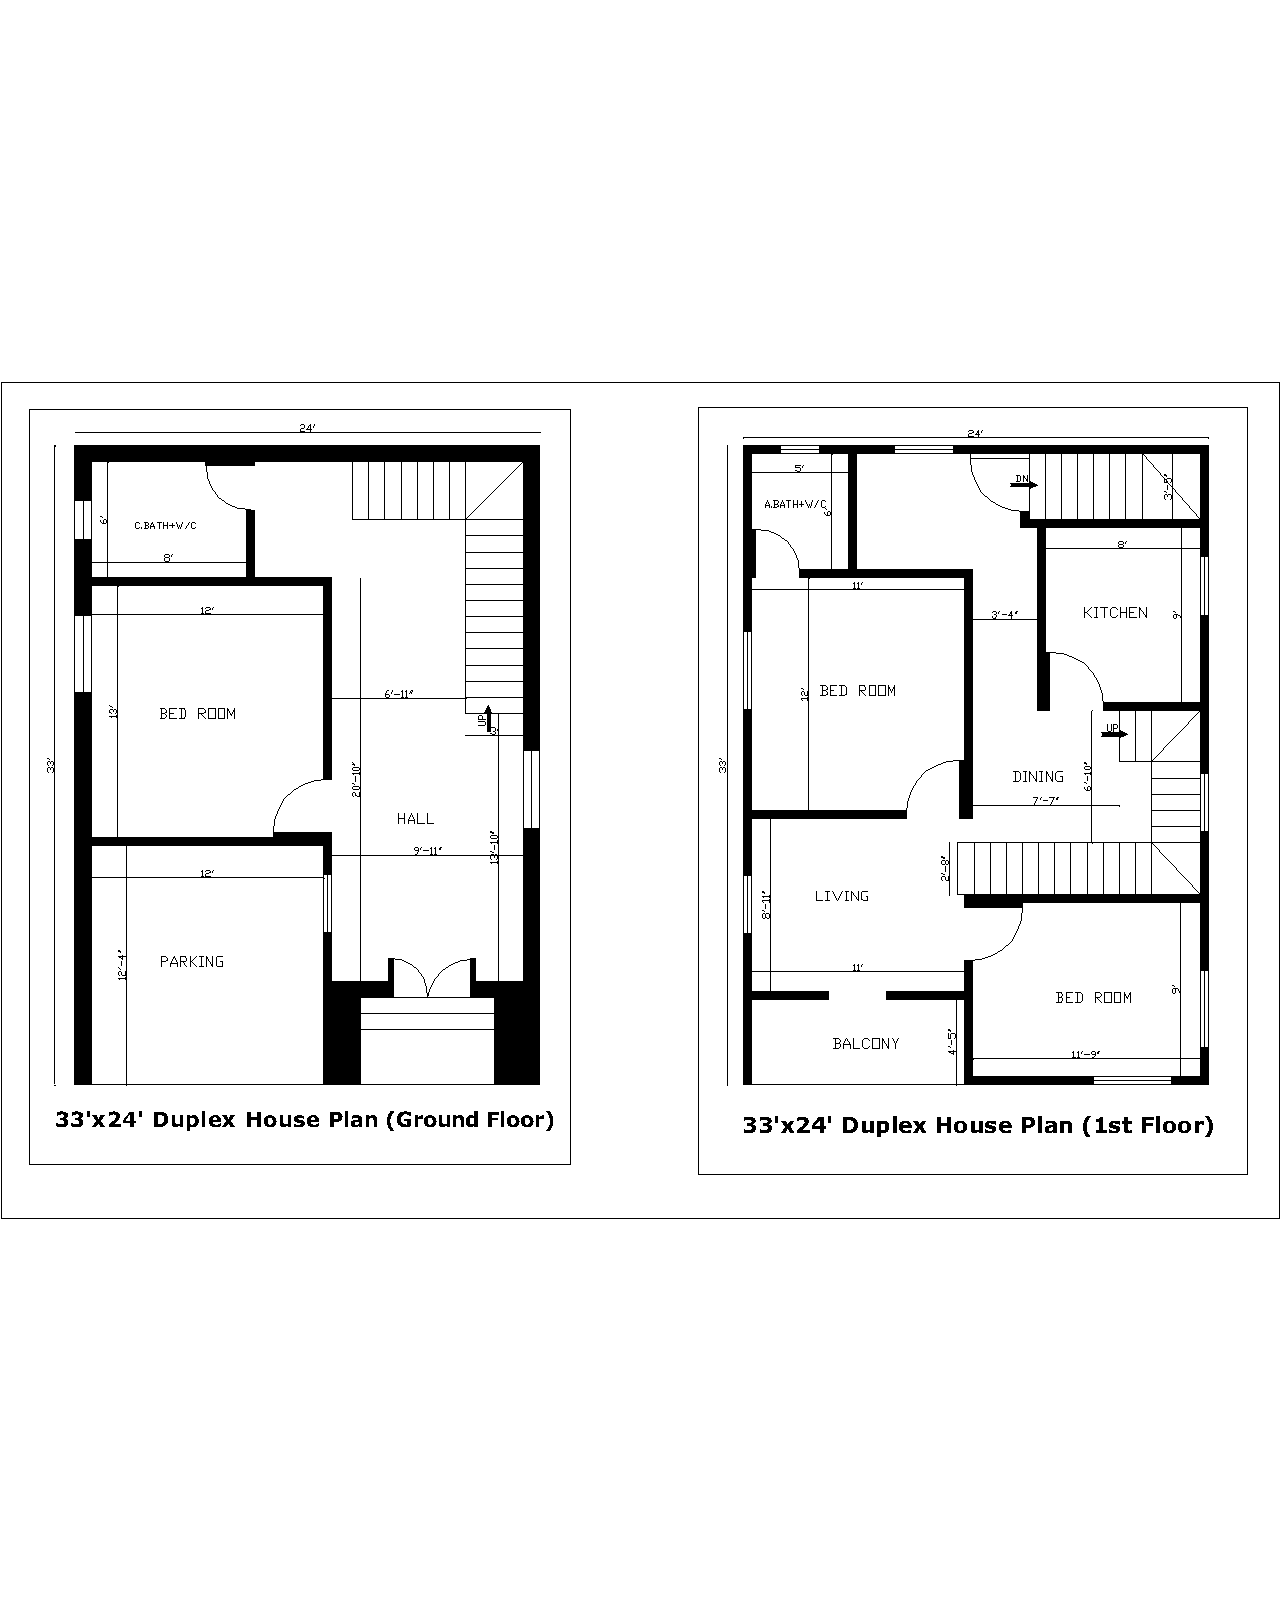 33'x24' Duplex House Plan